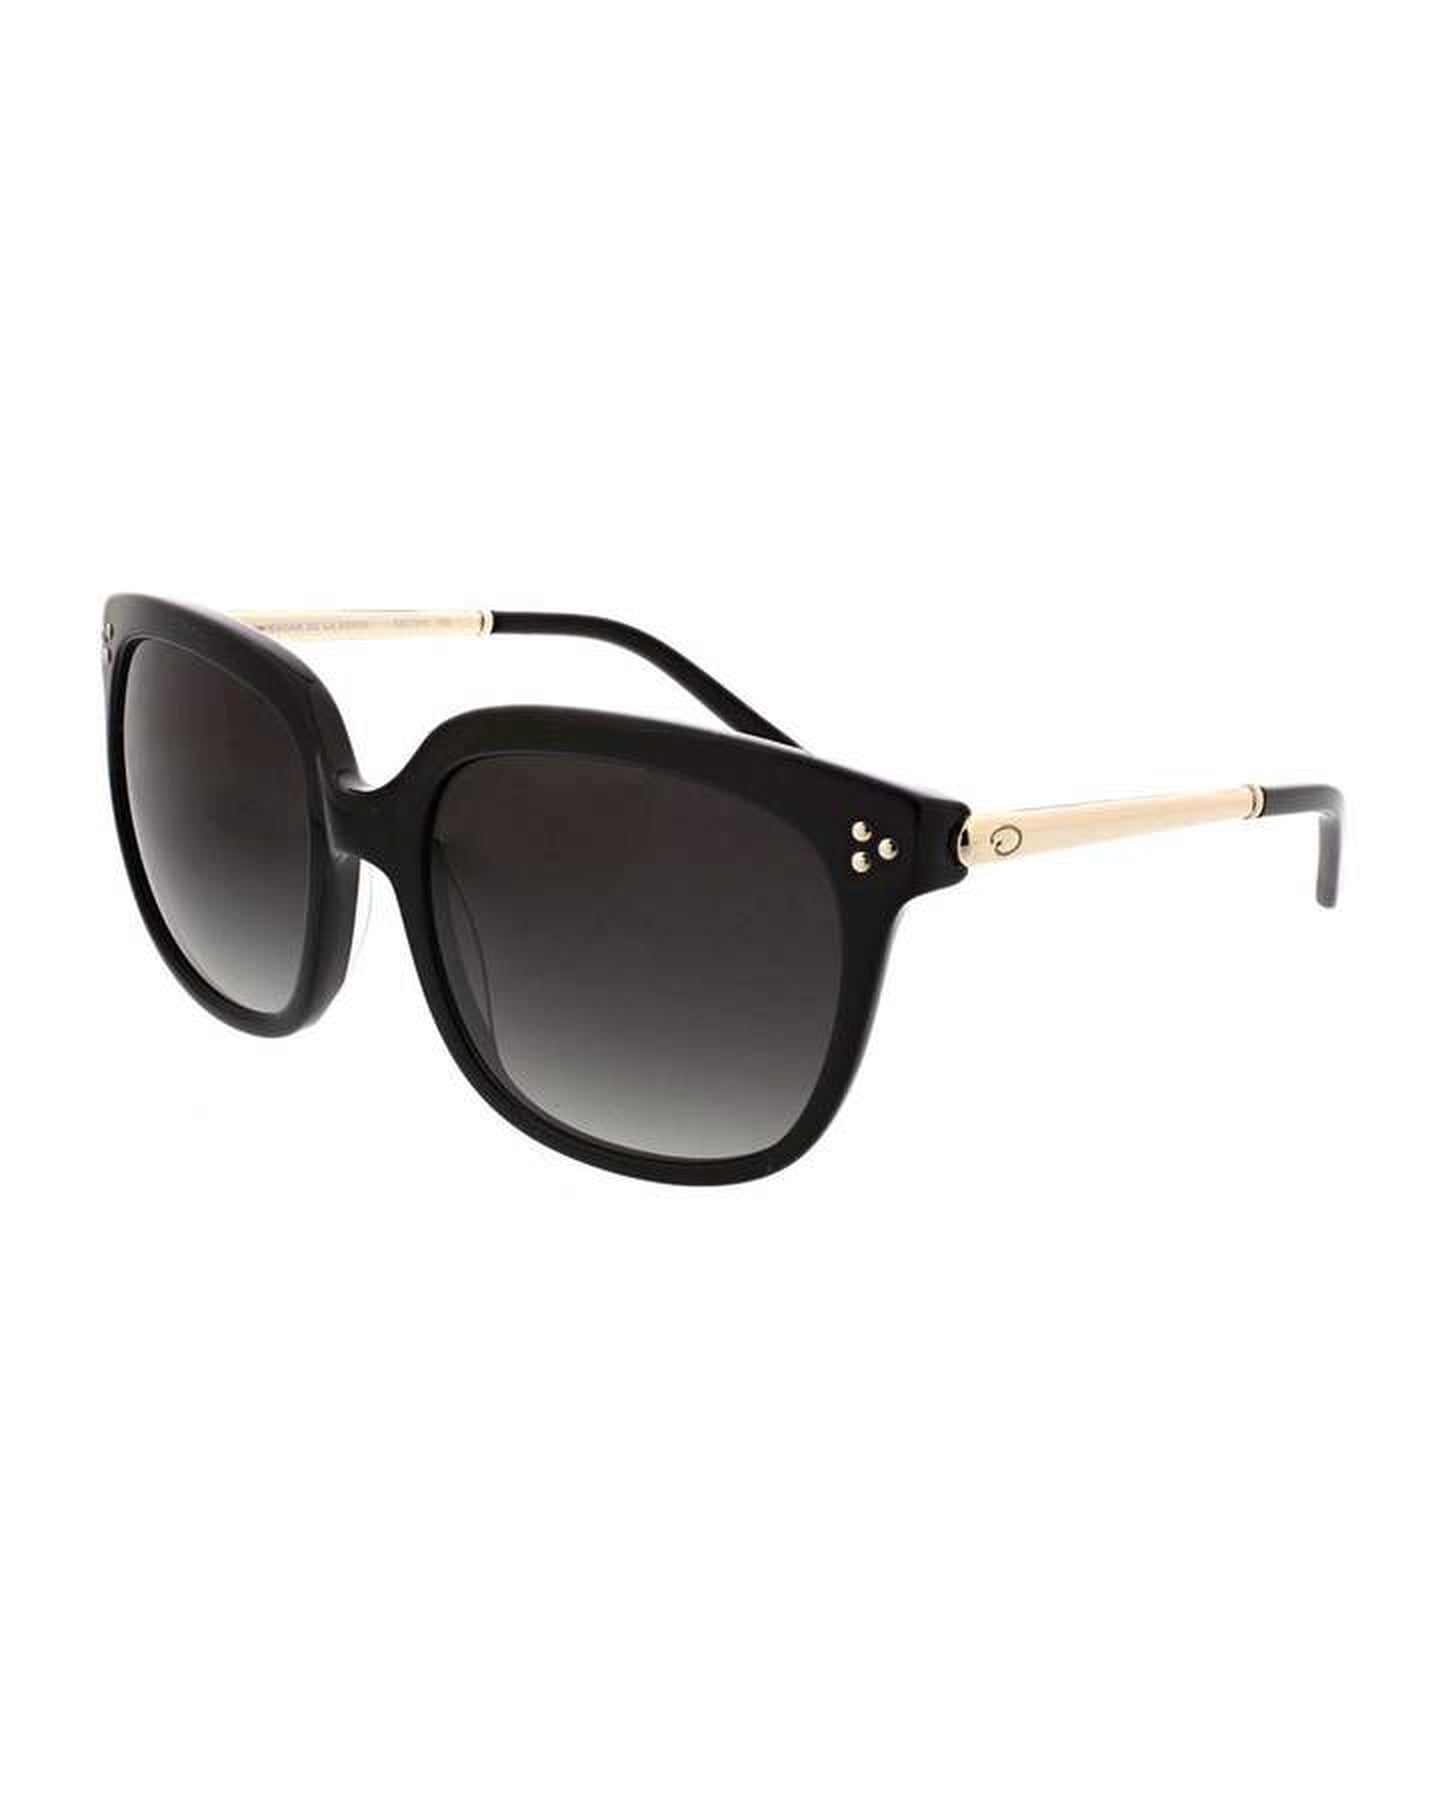 50 Sunglasses Under $50 | POPSUGAR Fashion